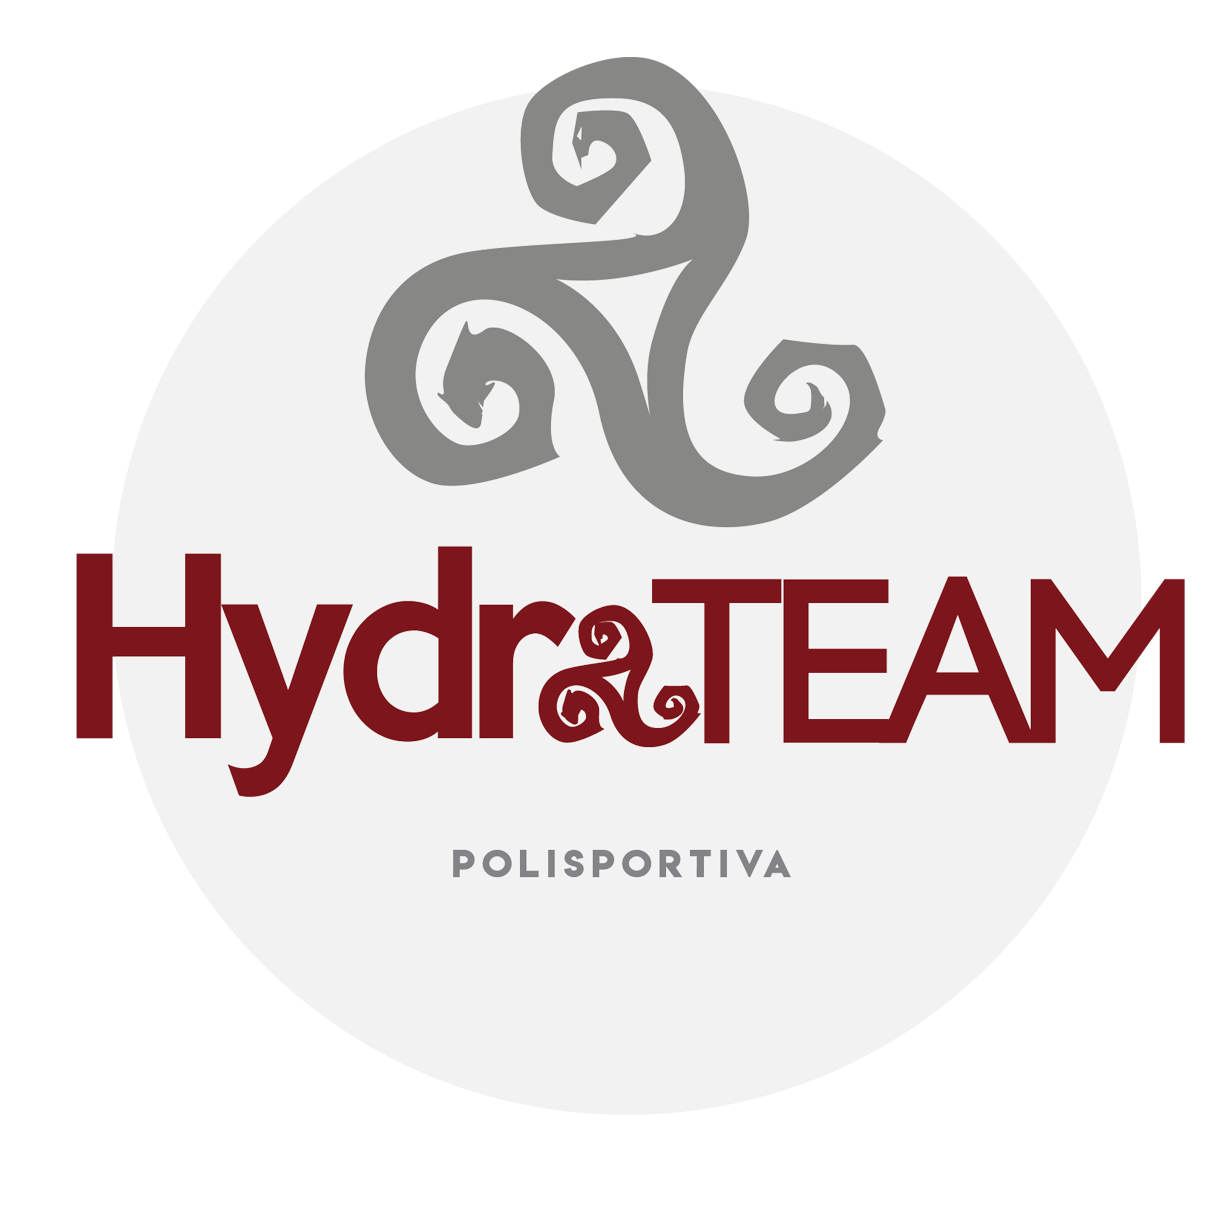 Hydra Team